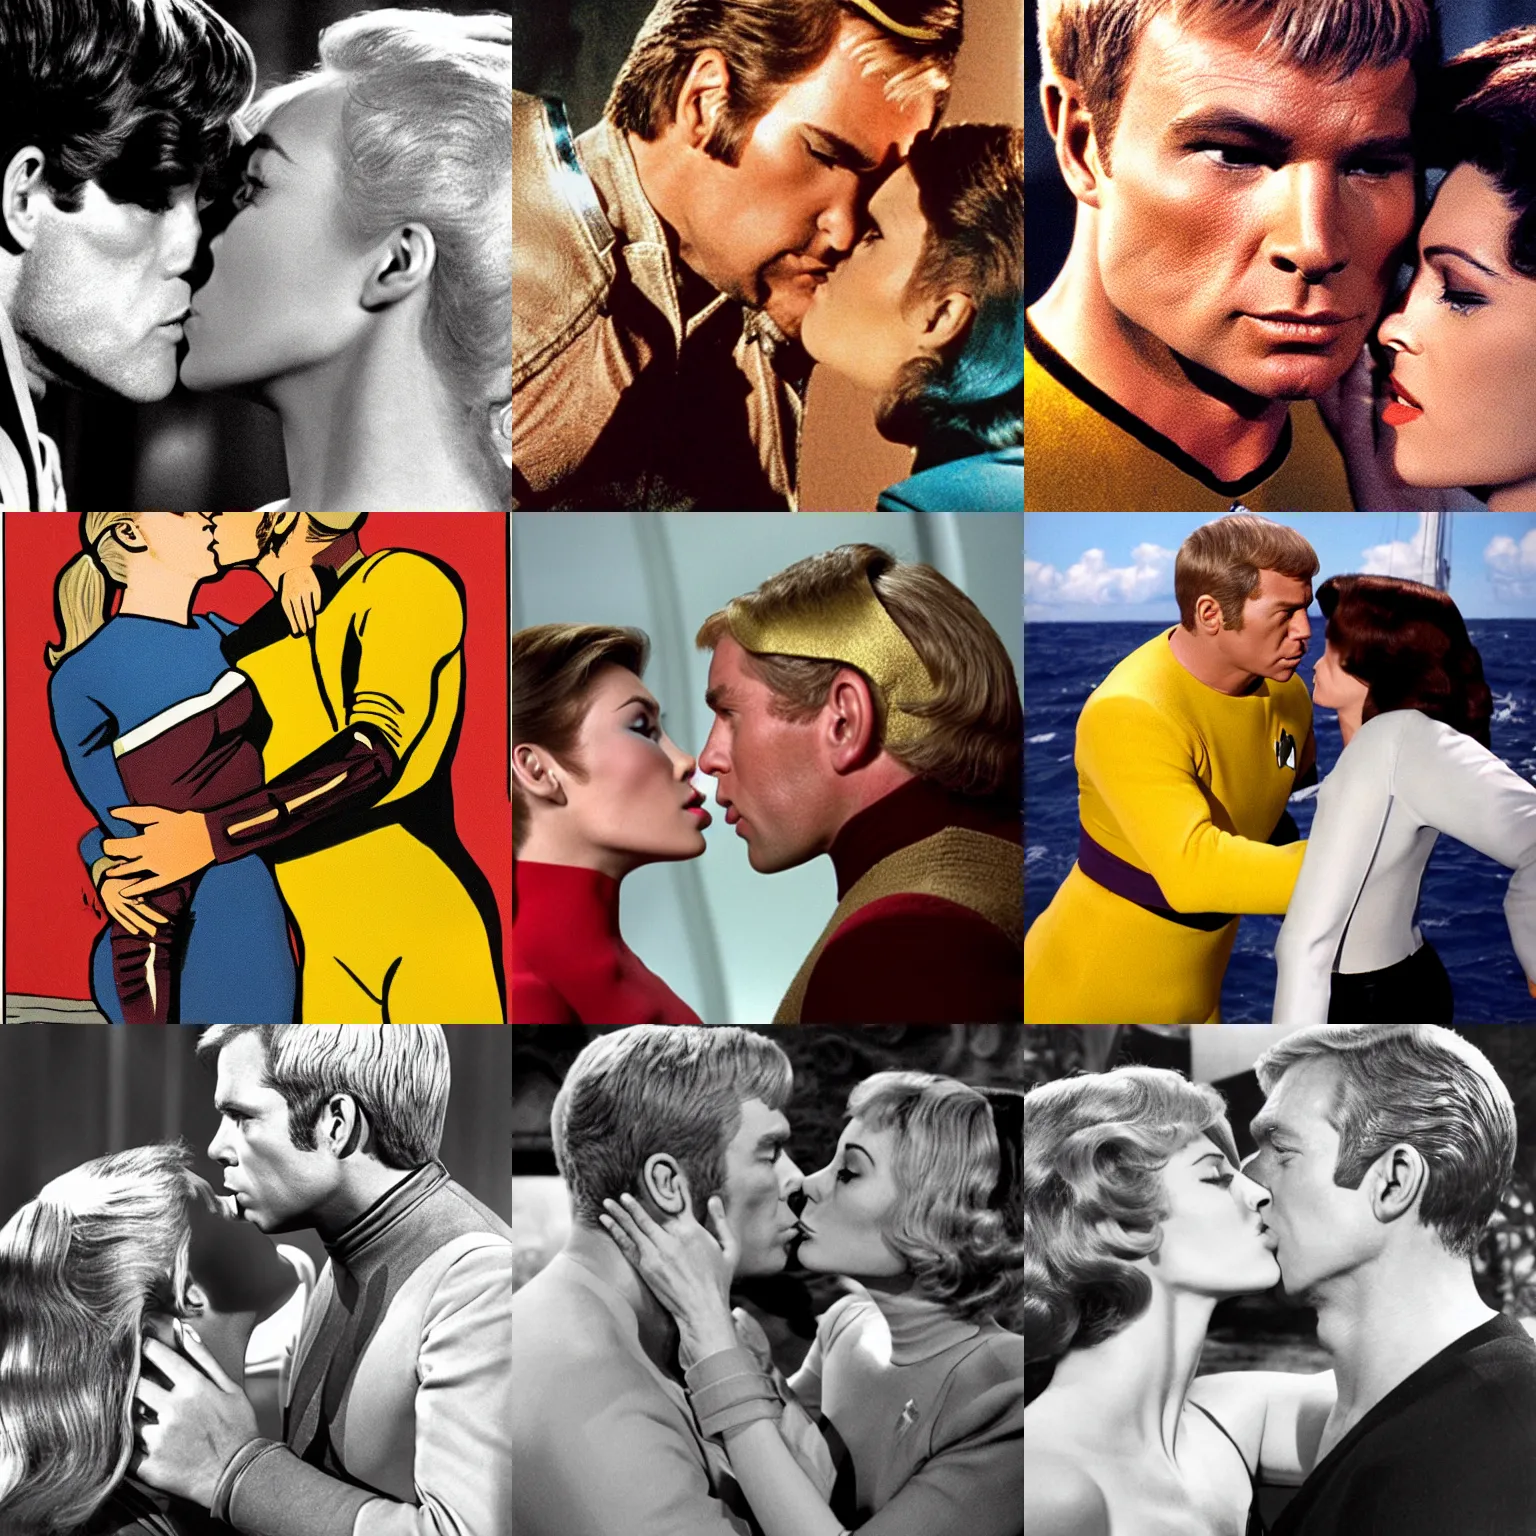 Prompt: Captain Kirk kissing